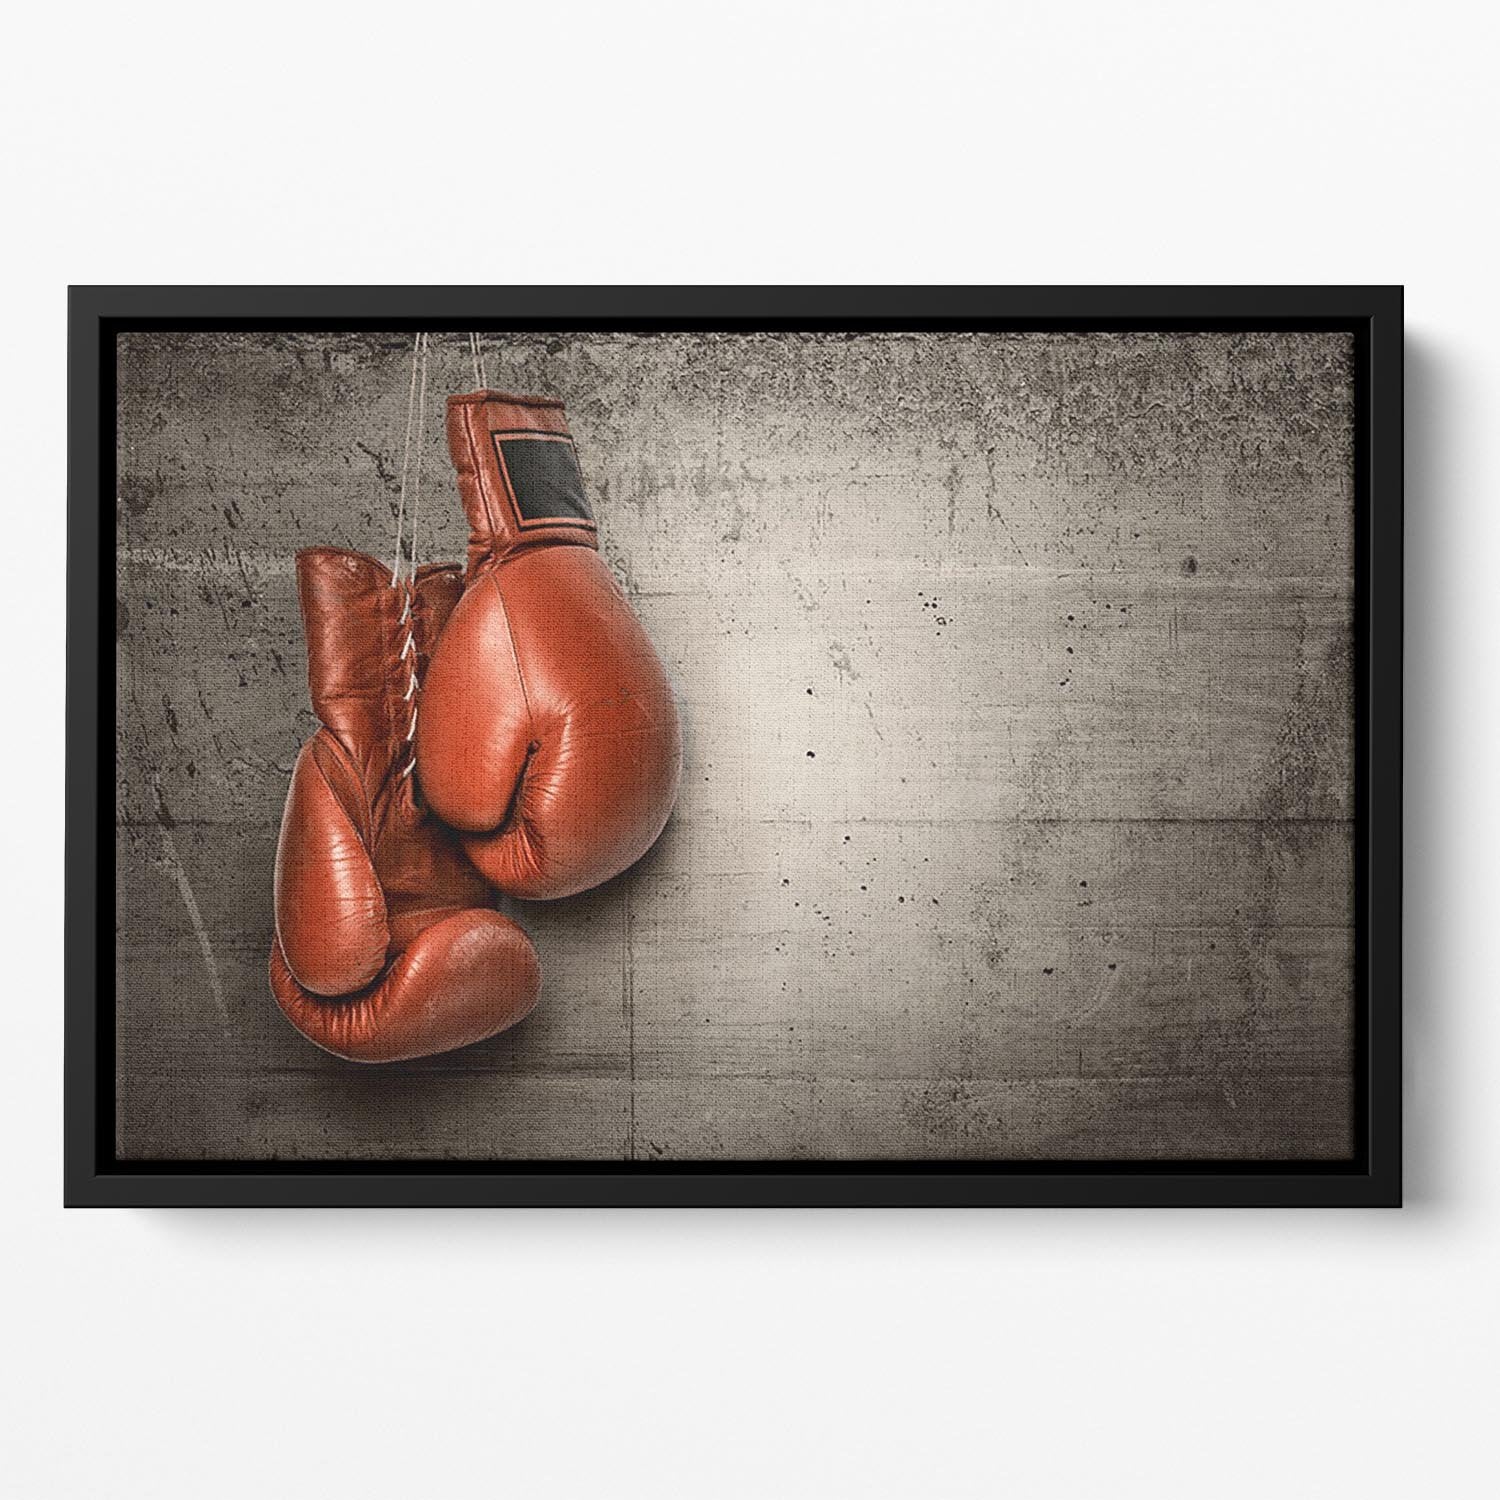 Boxing gloves hanging on concrete Floating Framed Canvas - Canvas Art Rocks - 2